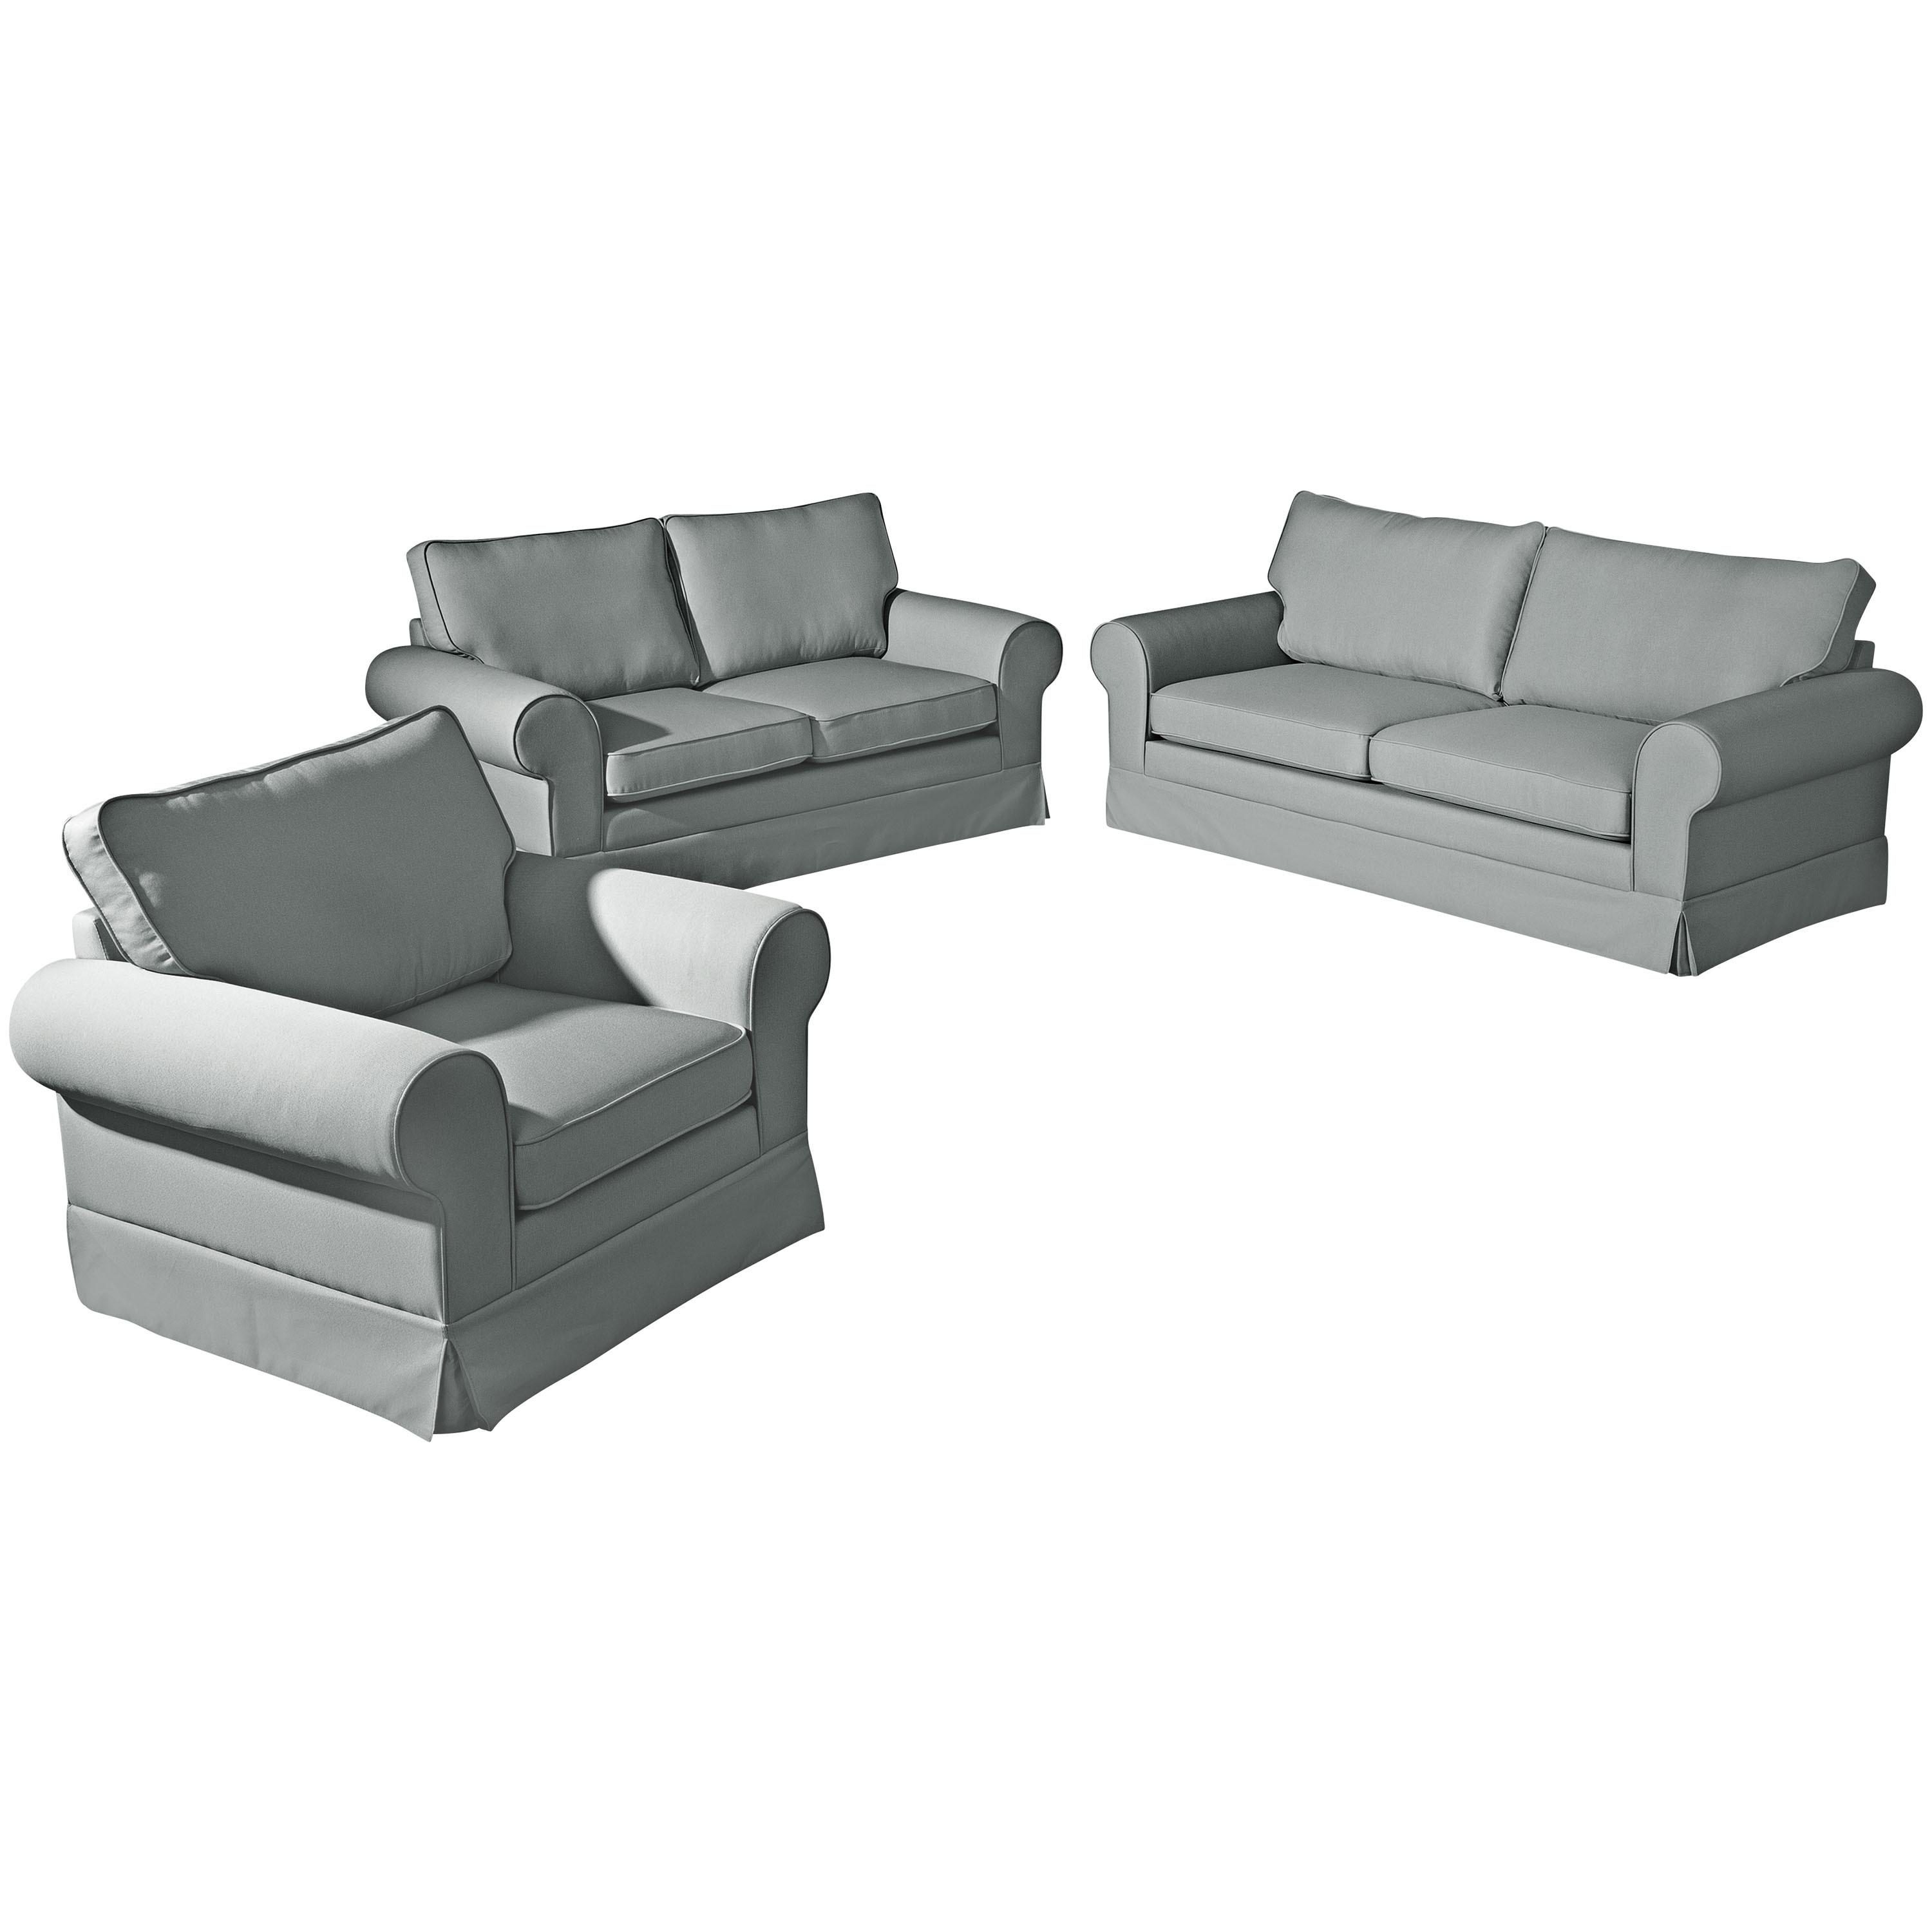 2-Sitzer-Sofa Hillary Mit Armlehnen Grau Leinenoptik - Grau, LIFESTYLE, Textil (172/85/89cm) - Max Winzer